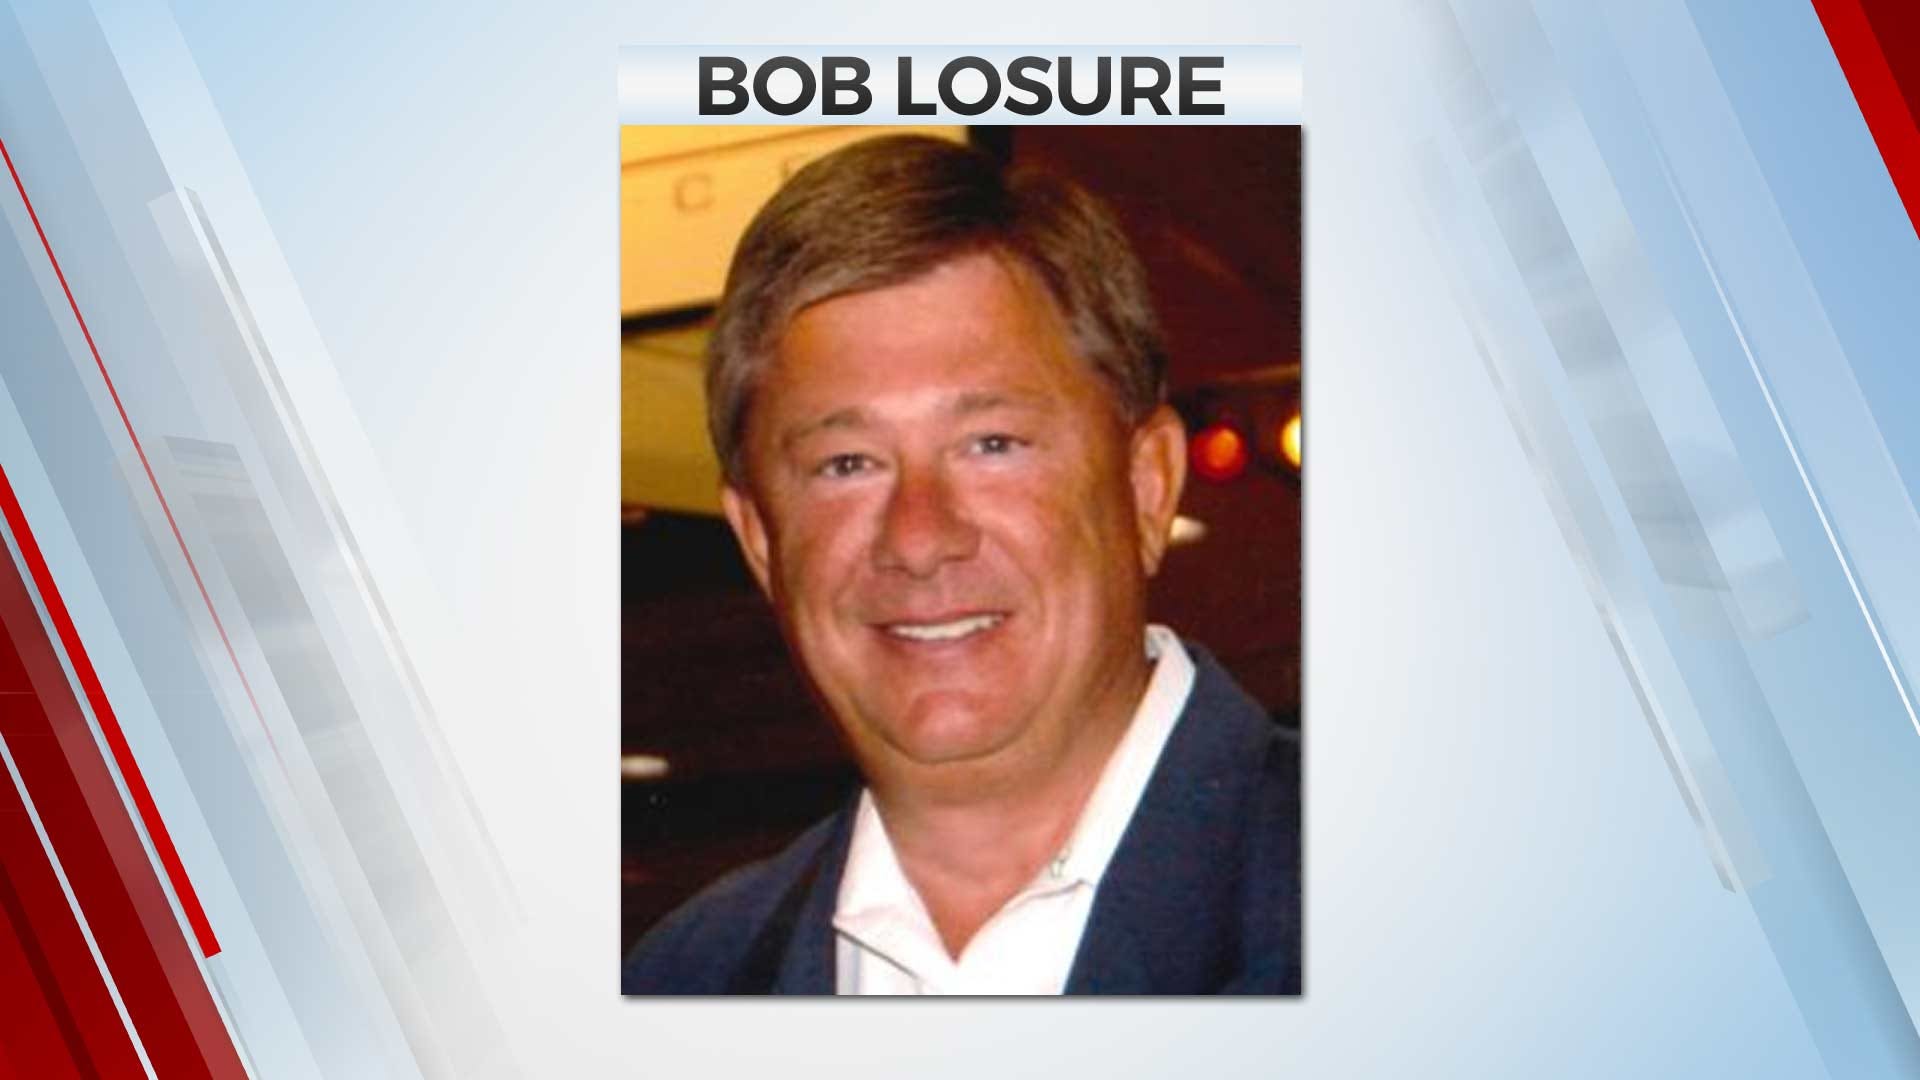 former-cnn-kotv-anchor-bob-losure-dies